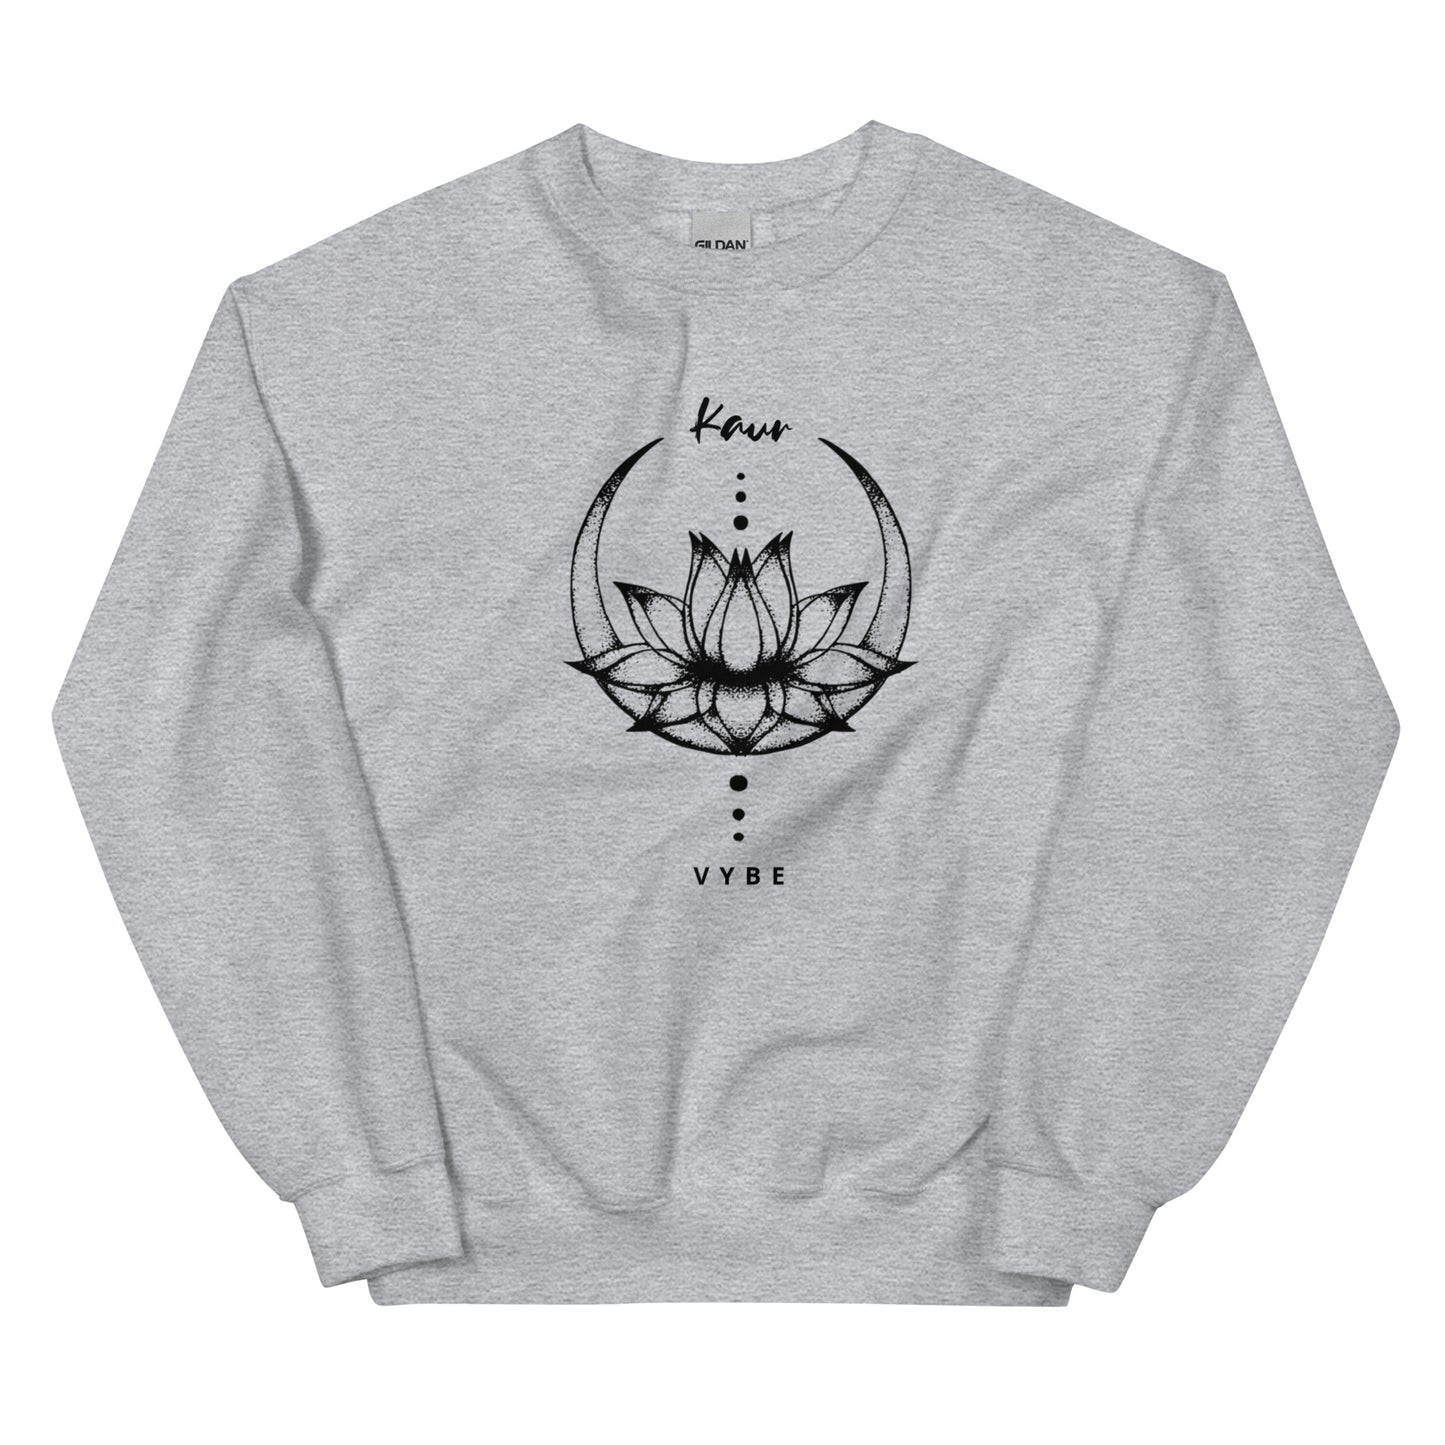 Kaur Vybe - Grey Crewneck Sweatshirt